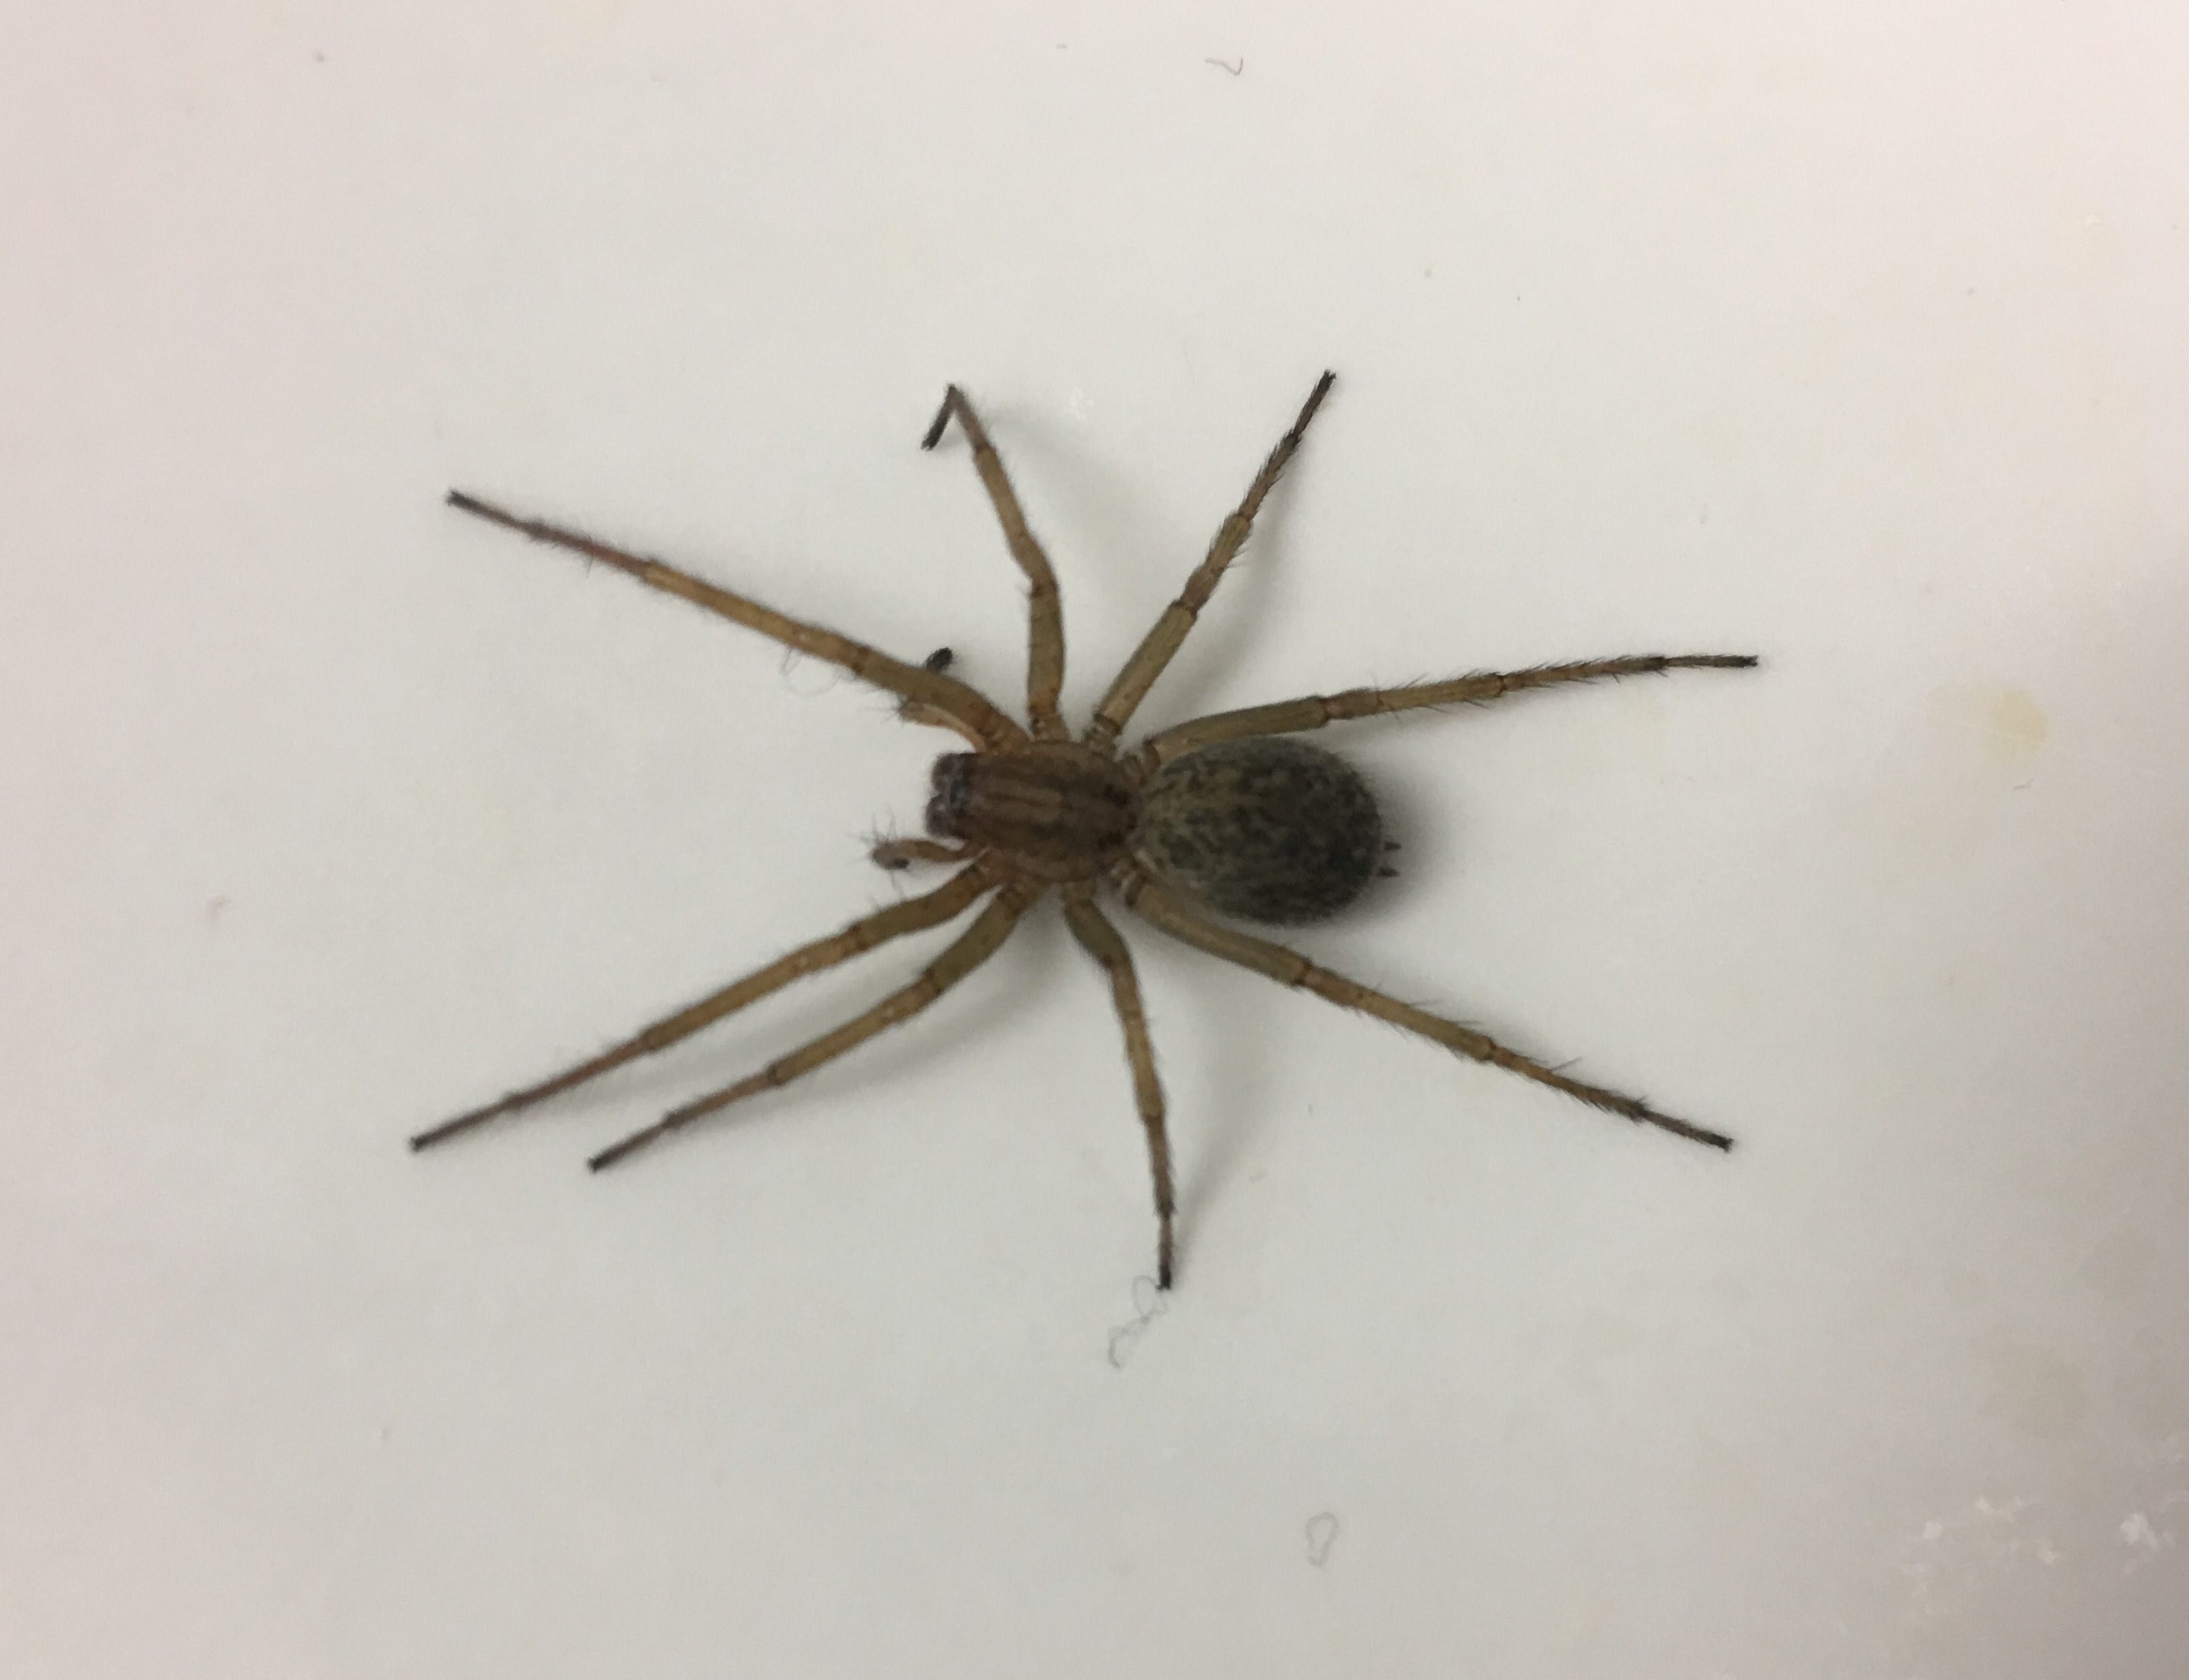 Picture of Eratigena agrestis (Hobo Spider) - Dorsal